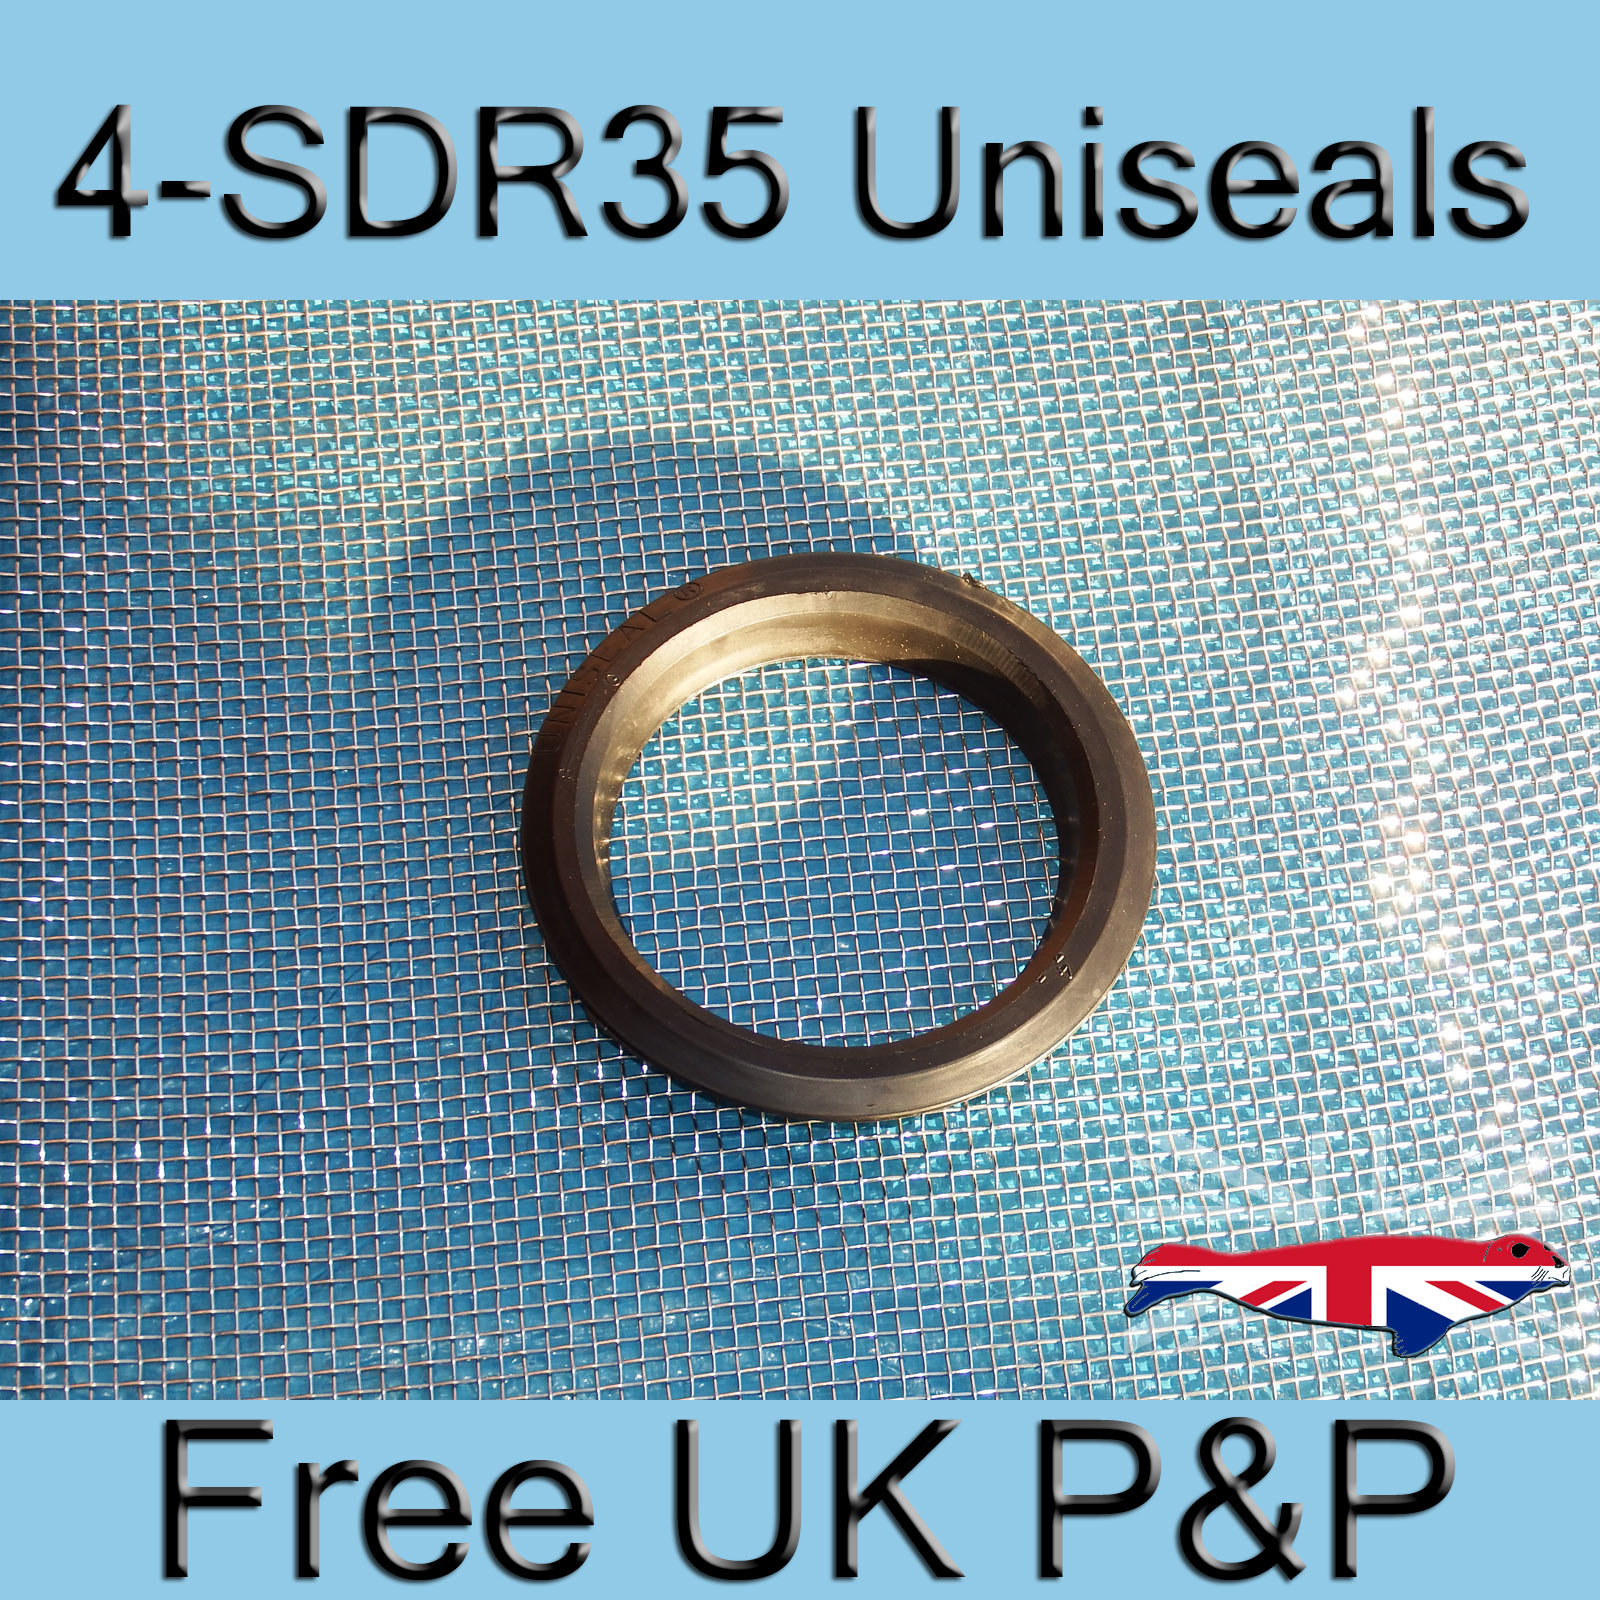 Buy 4 inch-SDR35 Uniseal Image